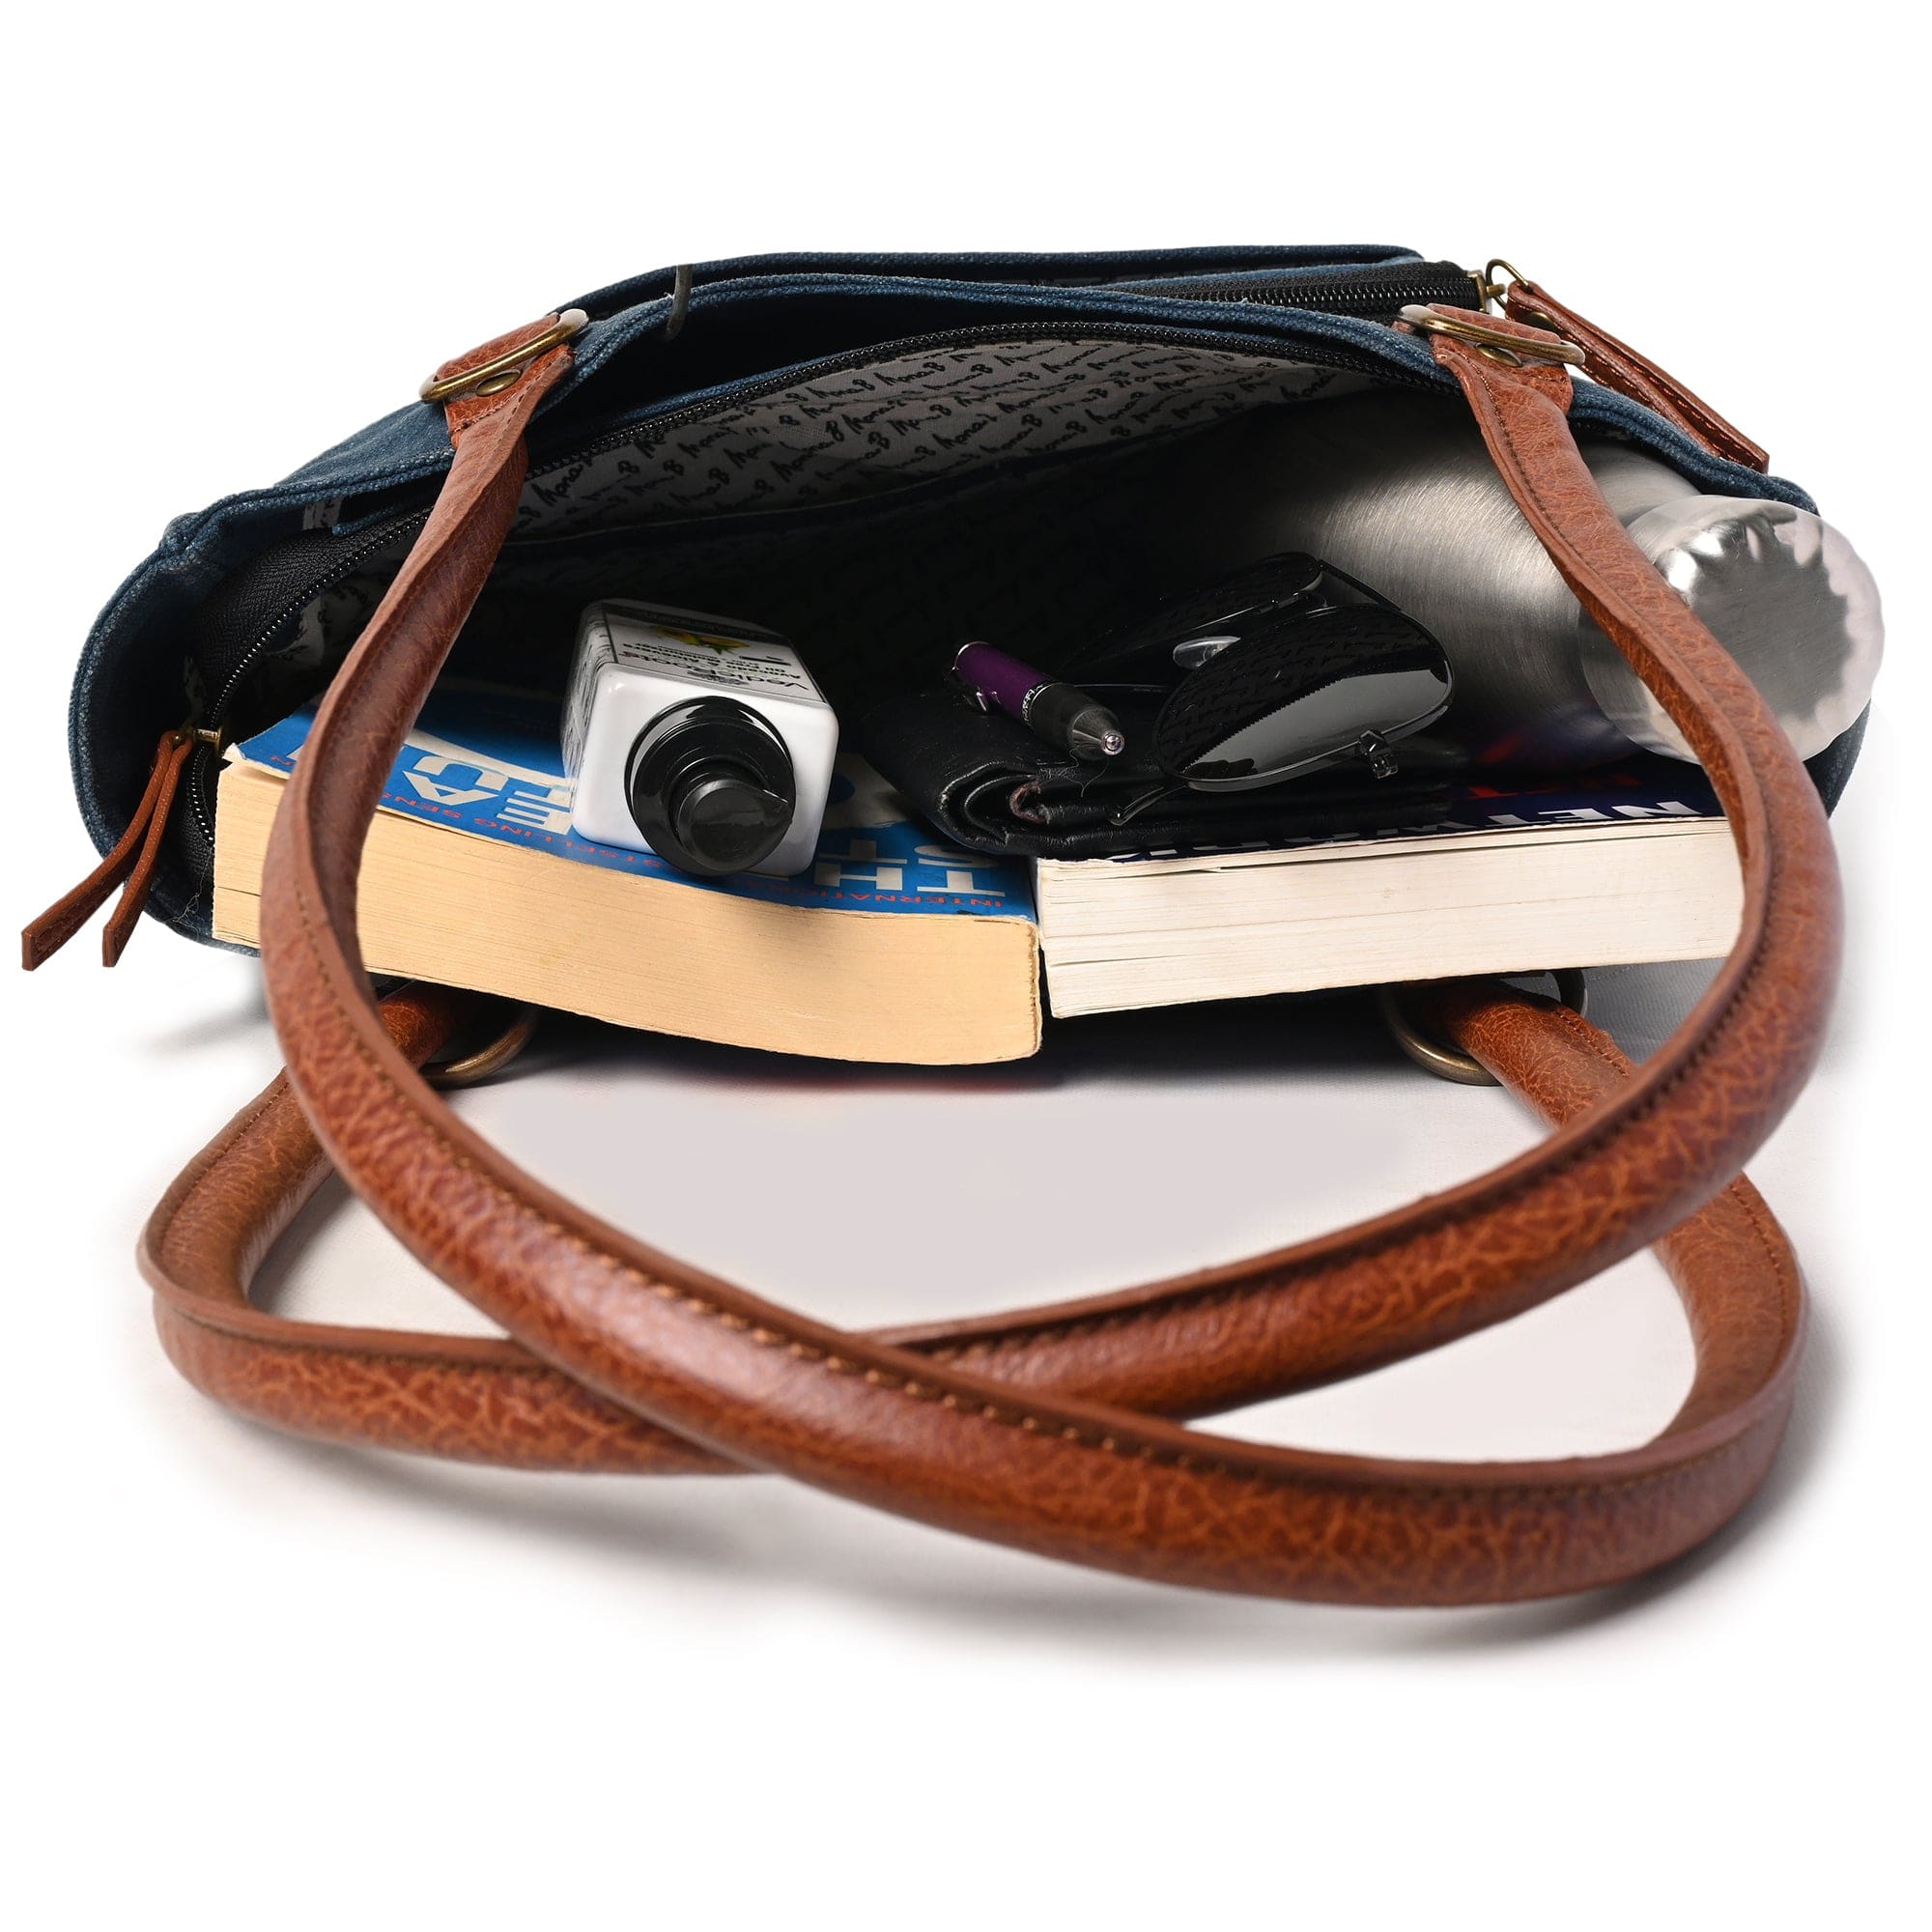 Mona B Two in One Convertible Tote: Denim - (M-2508) - Handbag/Backpack by Mona-B - 